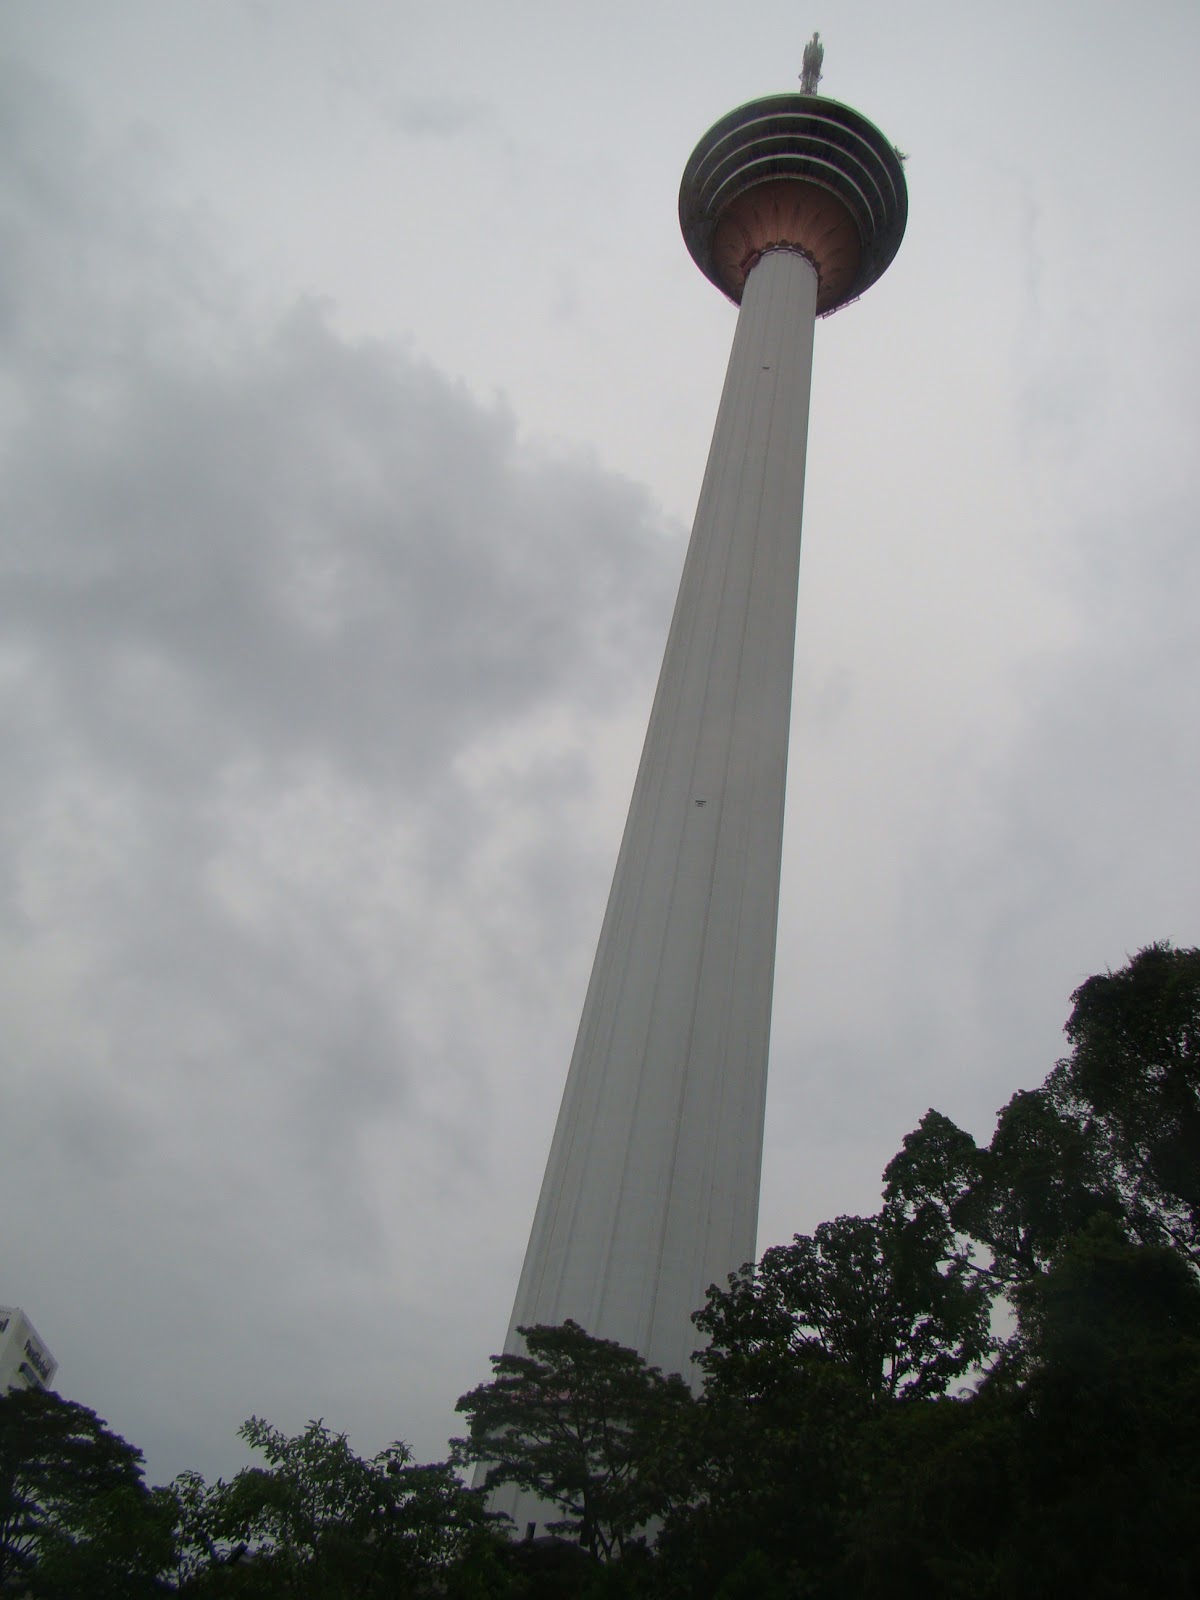 KL Tower, Menara Kuala Lumpur, Malaysia - eNidhi India Travel Blog